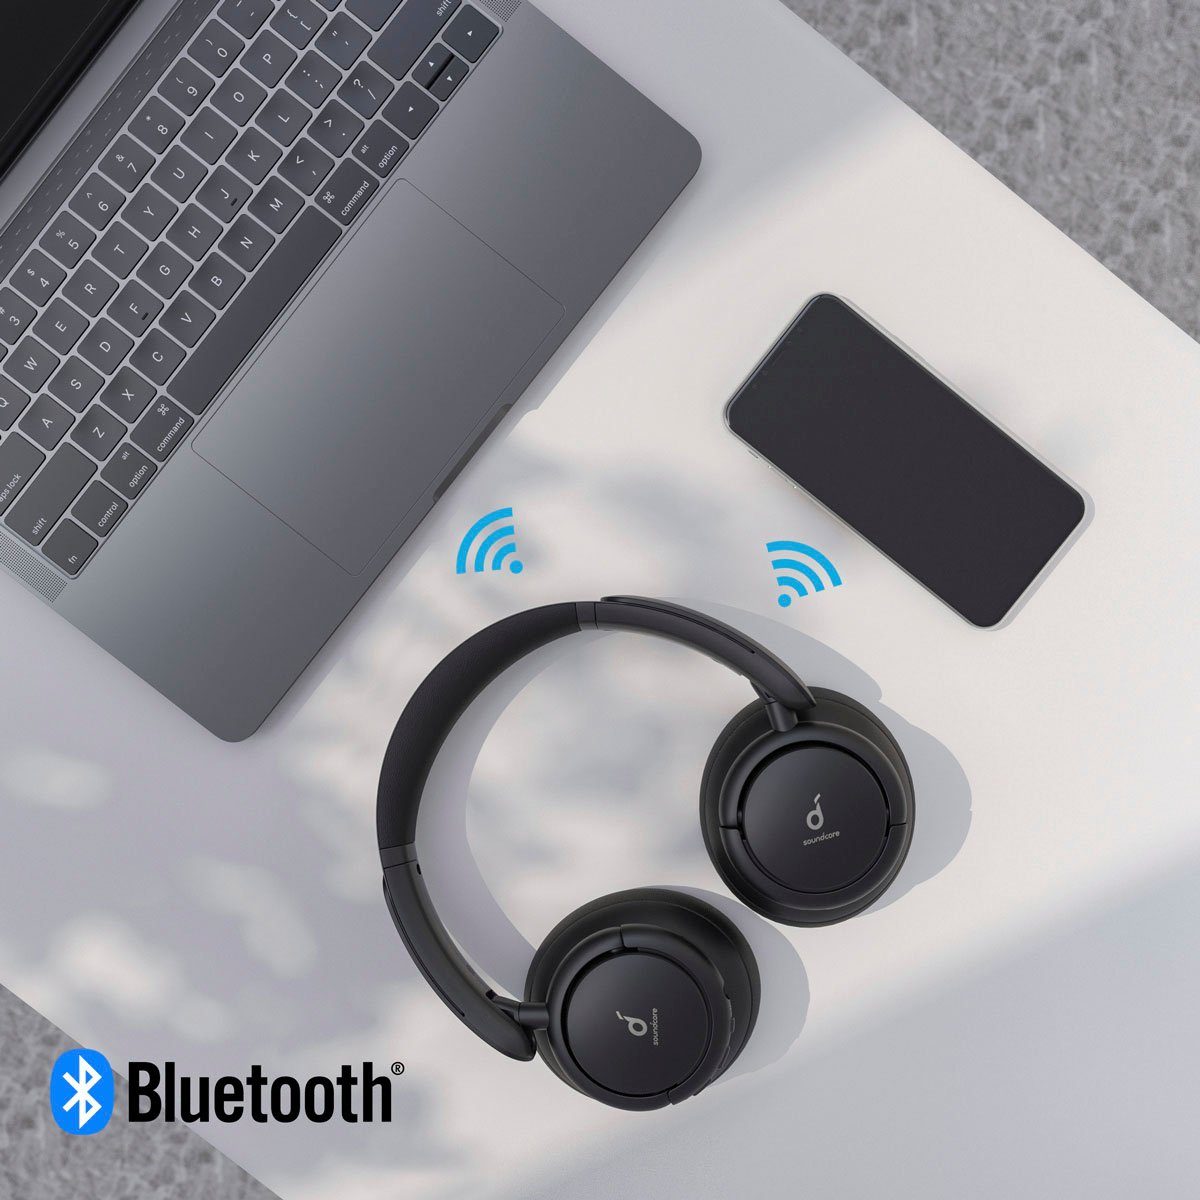 Life Headset Bluetooth) (Geräuschisolierung, Anker SOUNDCORE Tune